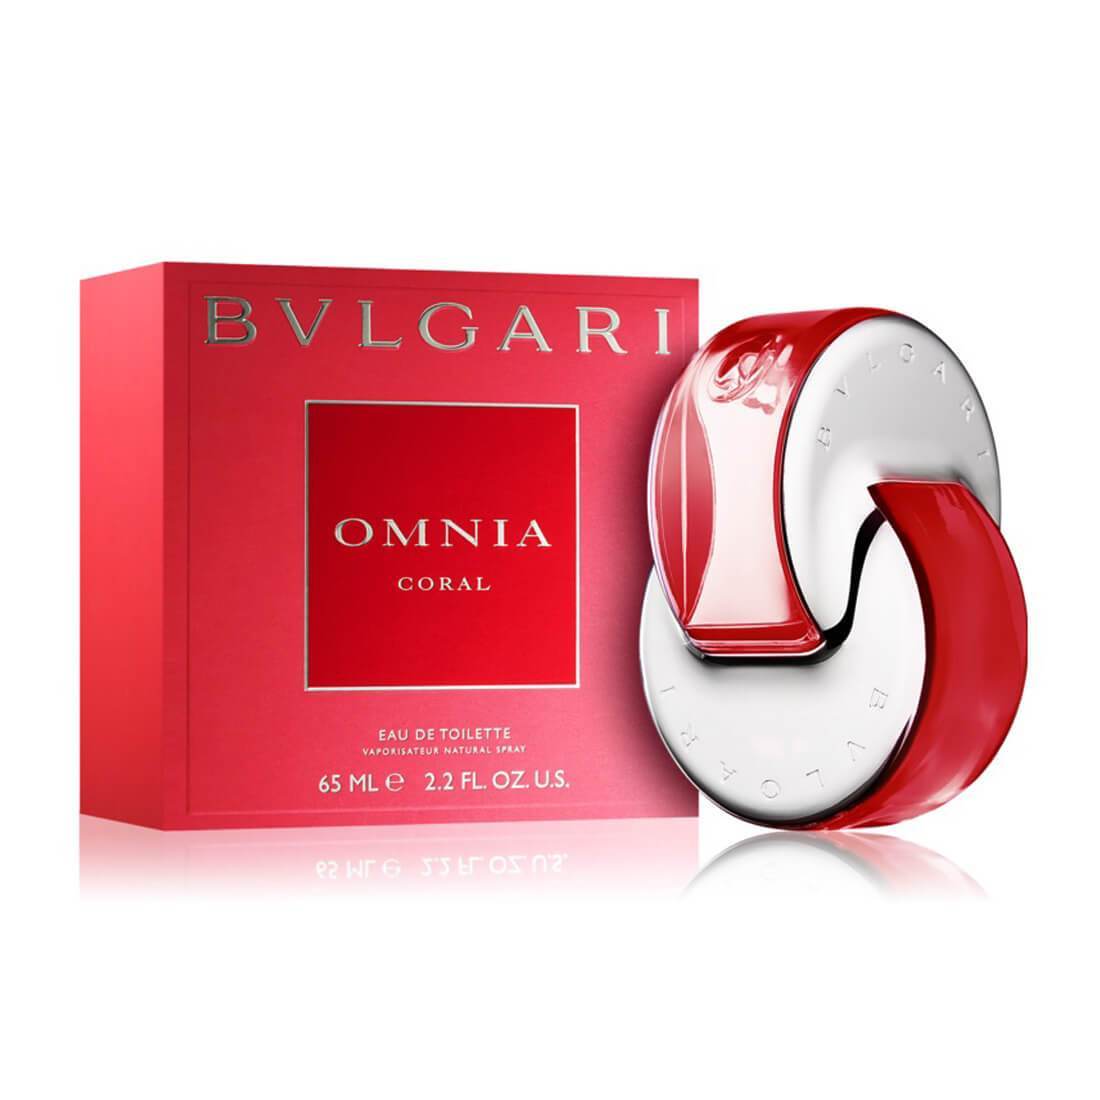 Bvlgari Omnia Coral EDT Perfume For 